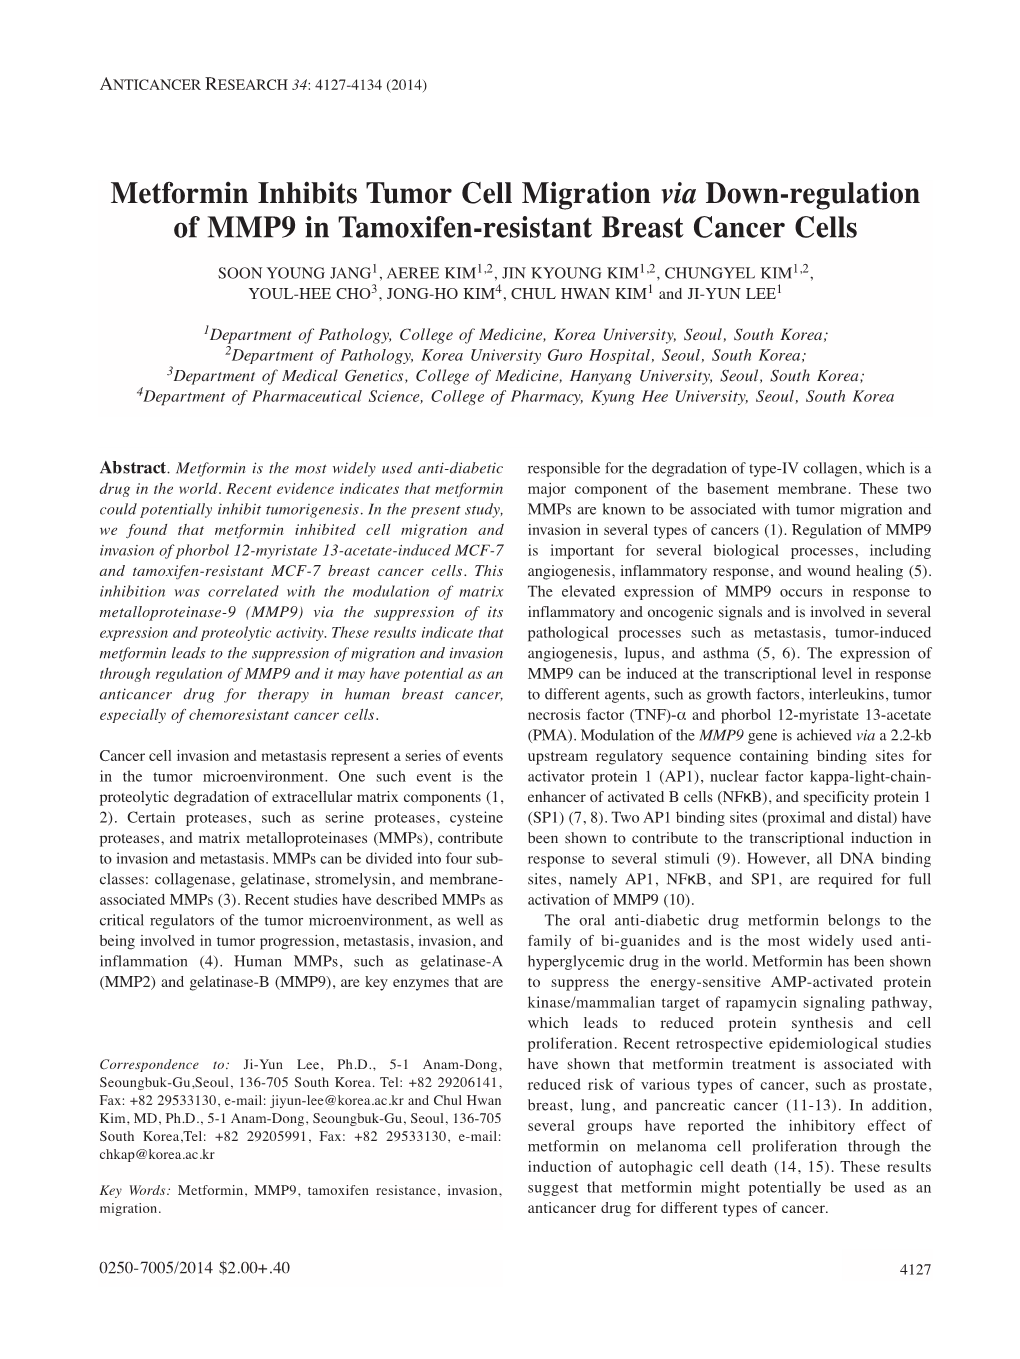 Metformin Inhibits Tumor Cell Migration Via Down-Regulation of MMP9 in Tamoxifen-Resistant Breast Cancer Cells